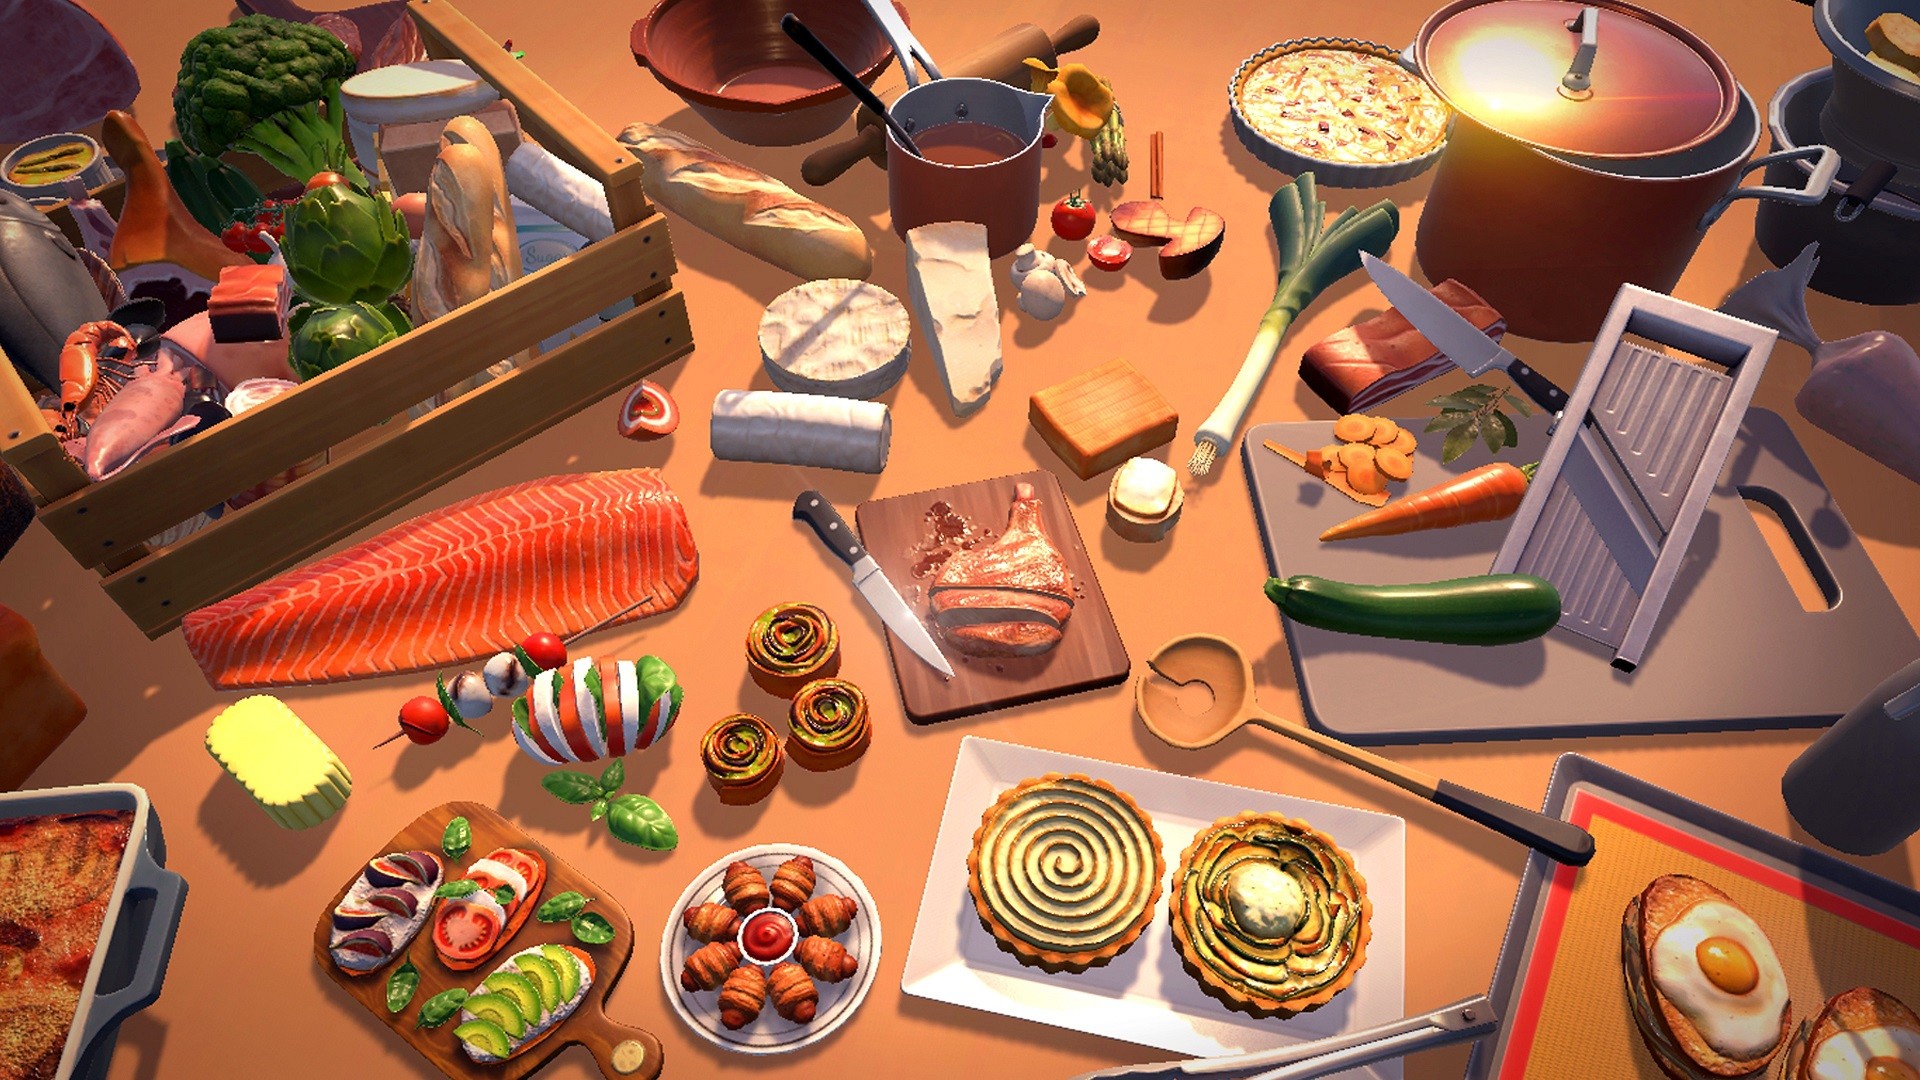 Chef Life: A Restaurant Simulator Steam CD Key 12.05 usd